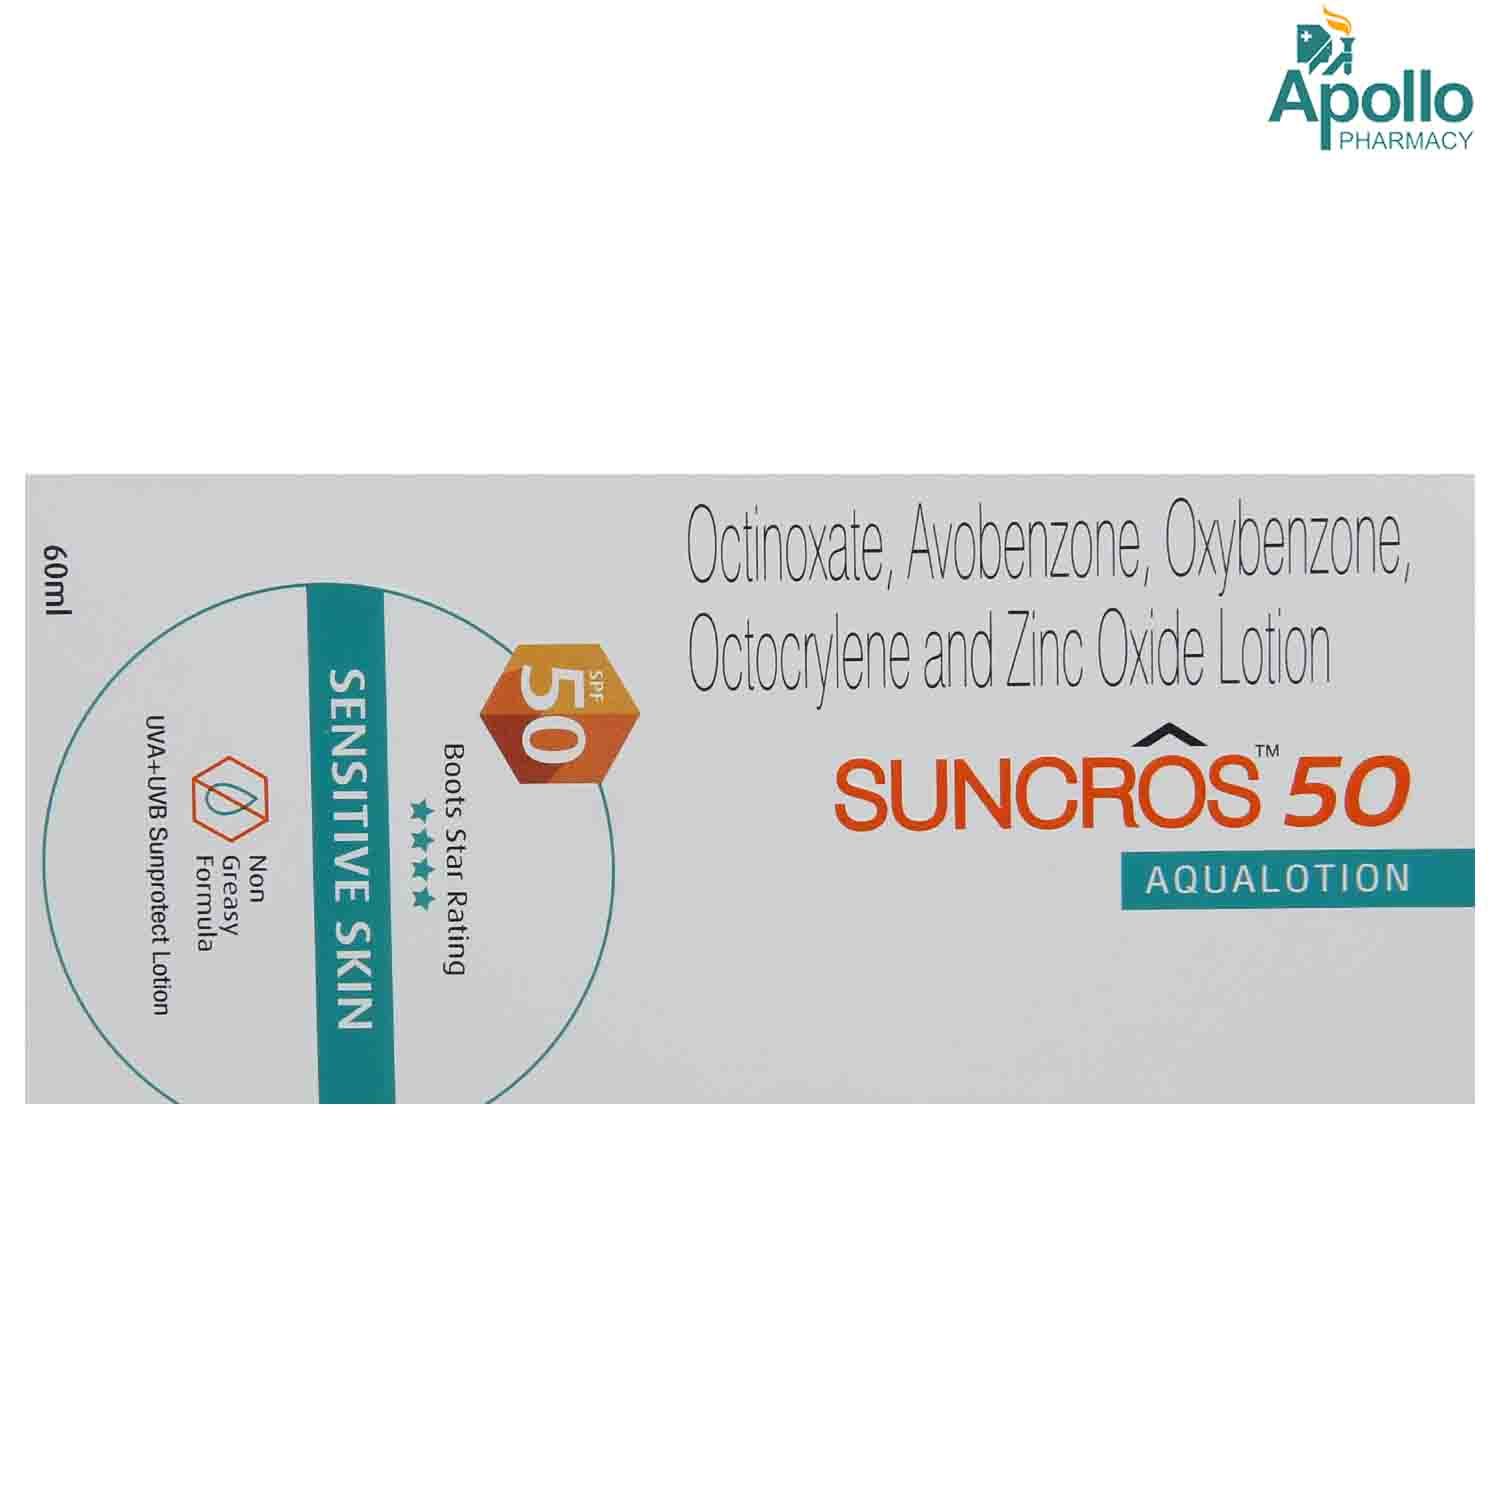 Suncros 50 Aqualotion 60 ml Price, Uses, Side Effects, Composition - Apollo Pharmacy